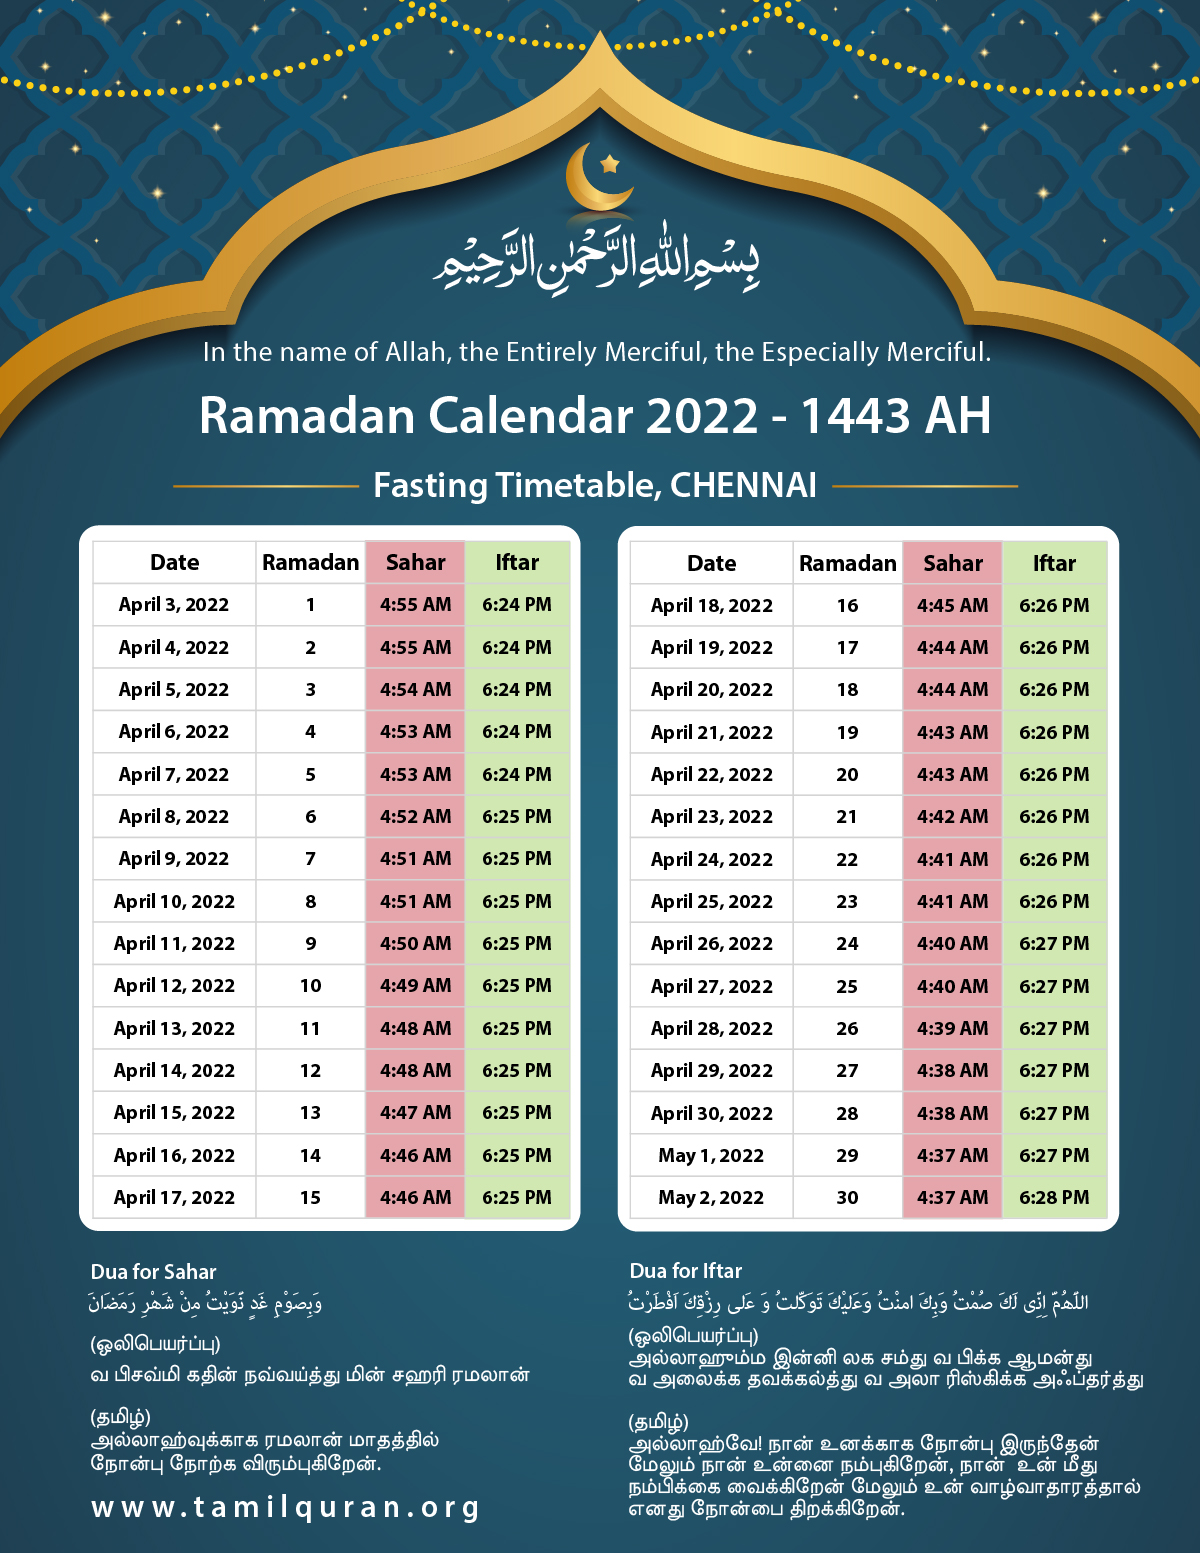 Ramadan Fasting TimeTable 2022 Chennai